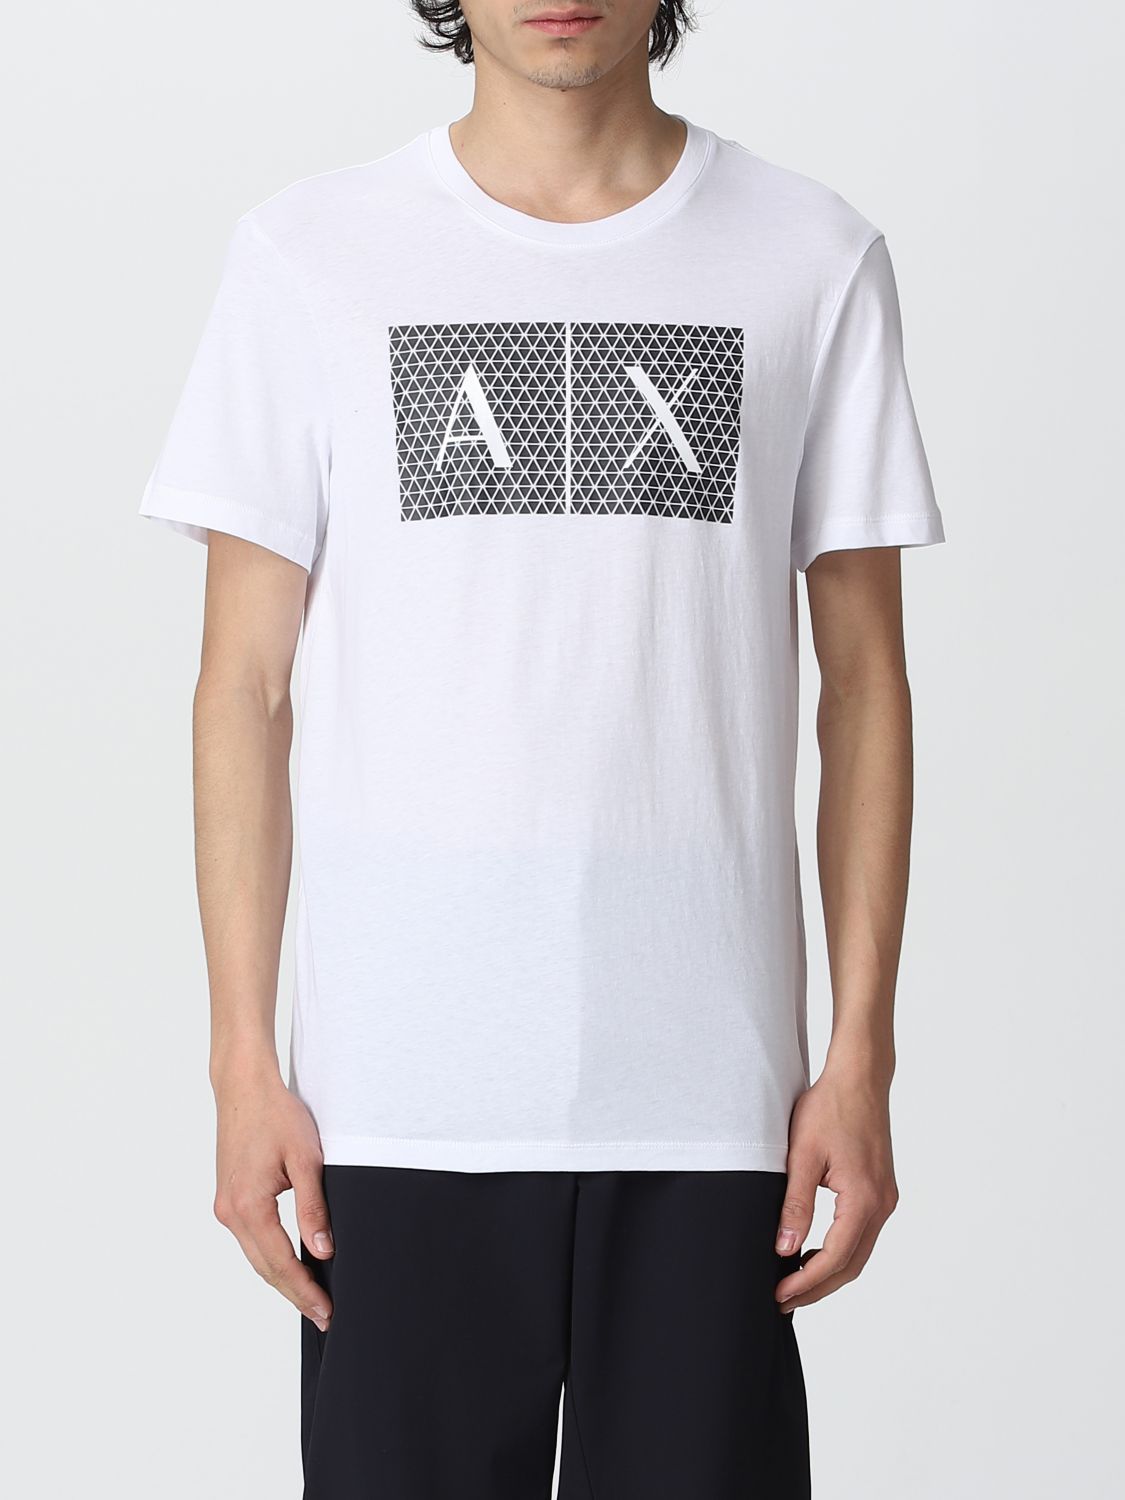 Snikken het dossier Pittig ARMANI EXCHANGE: t-shirt for man - White | Armani Exchange t-shirt  8NZTCKZ8H4Z online on GIGLIO.COM